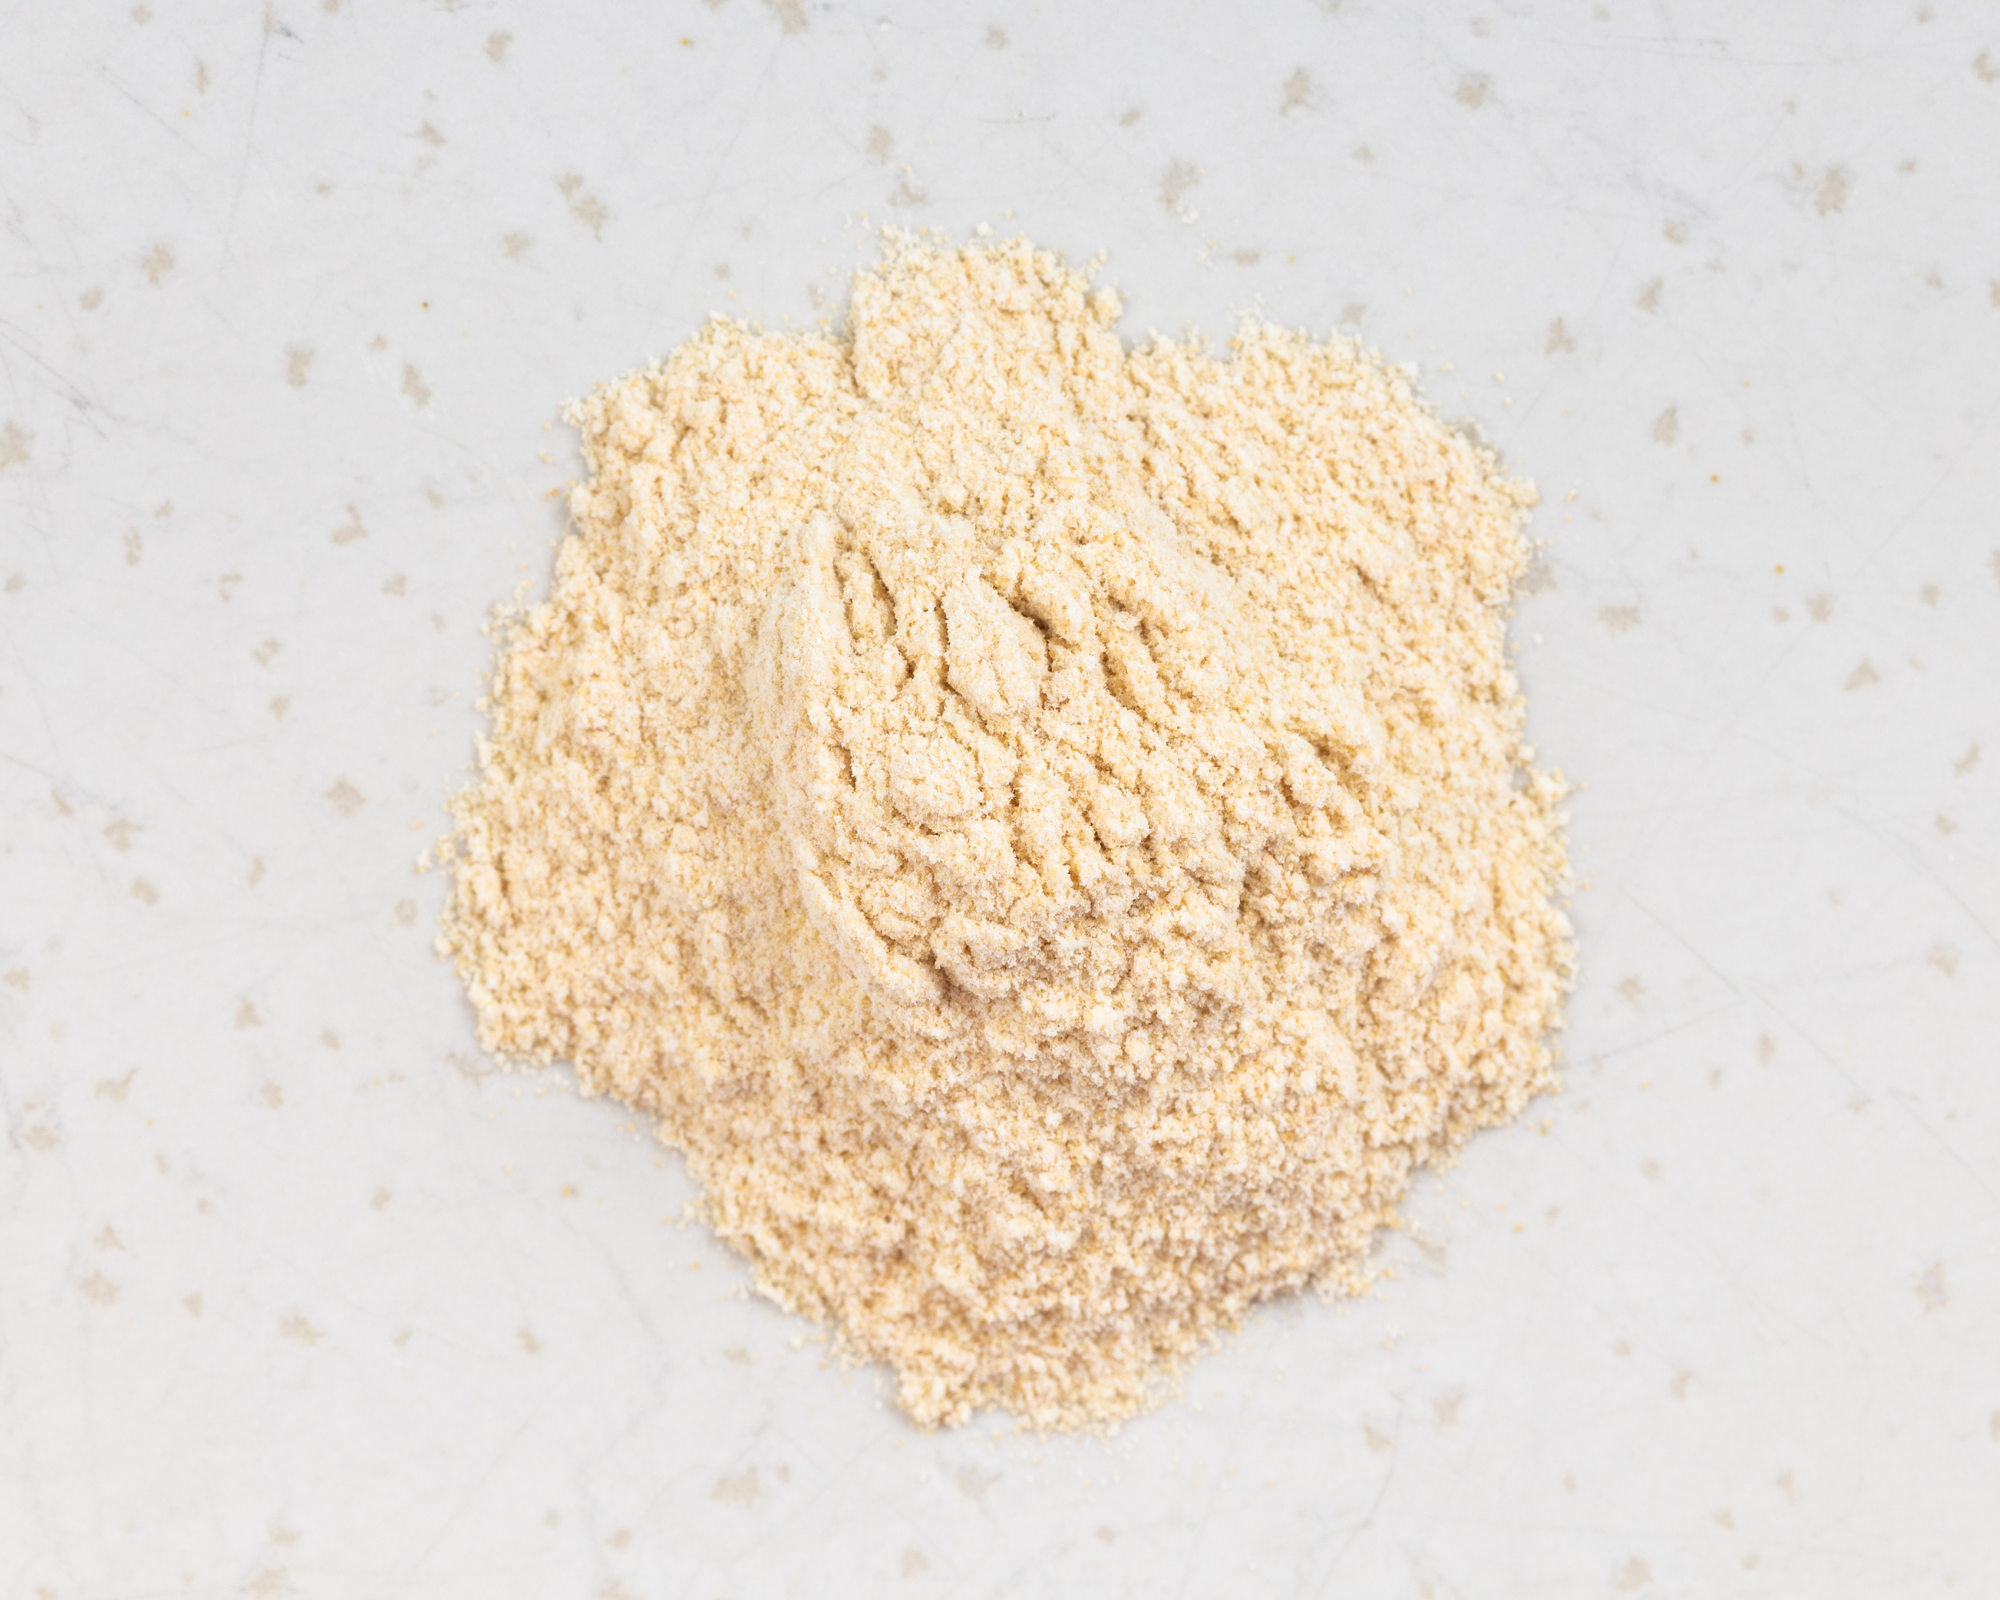 Nim’s Apple Powder: A Versatile, Vegan Ingredient for Your Favorite Recipes